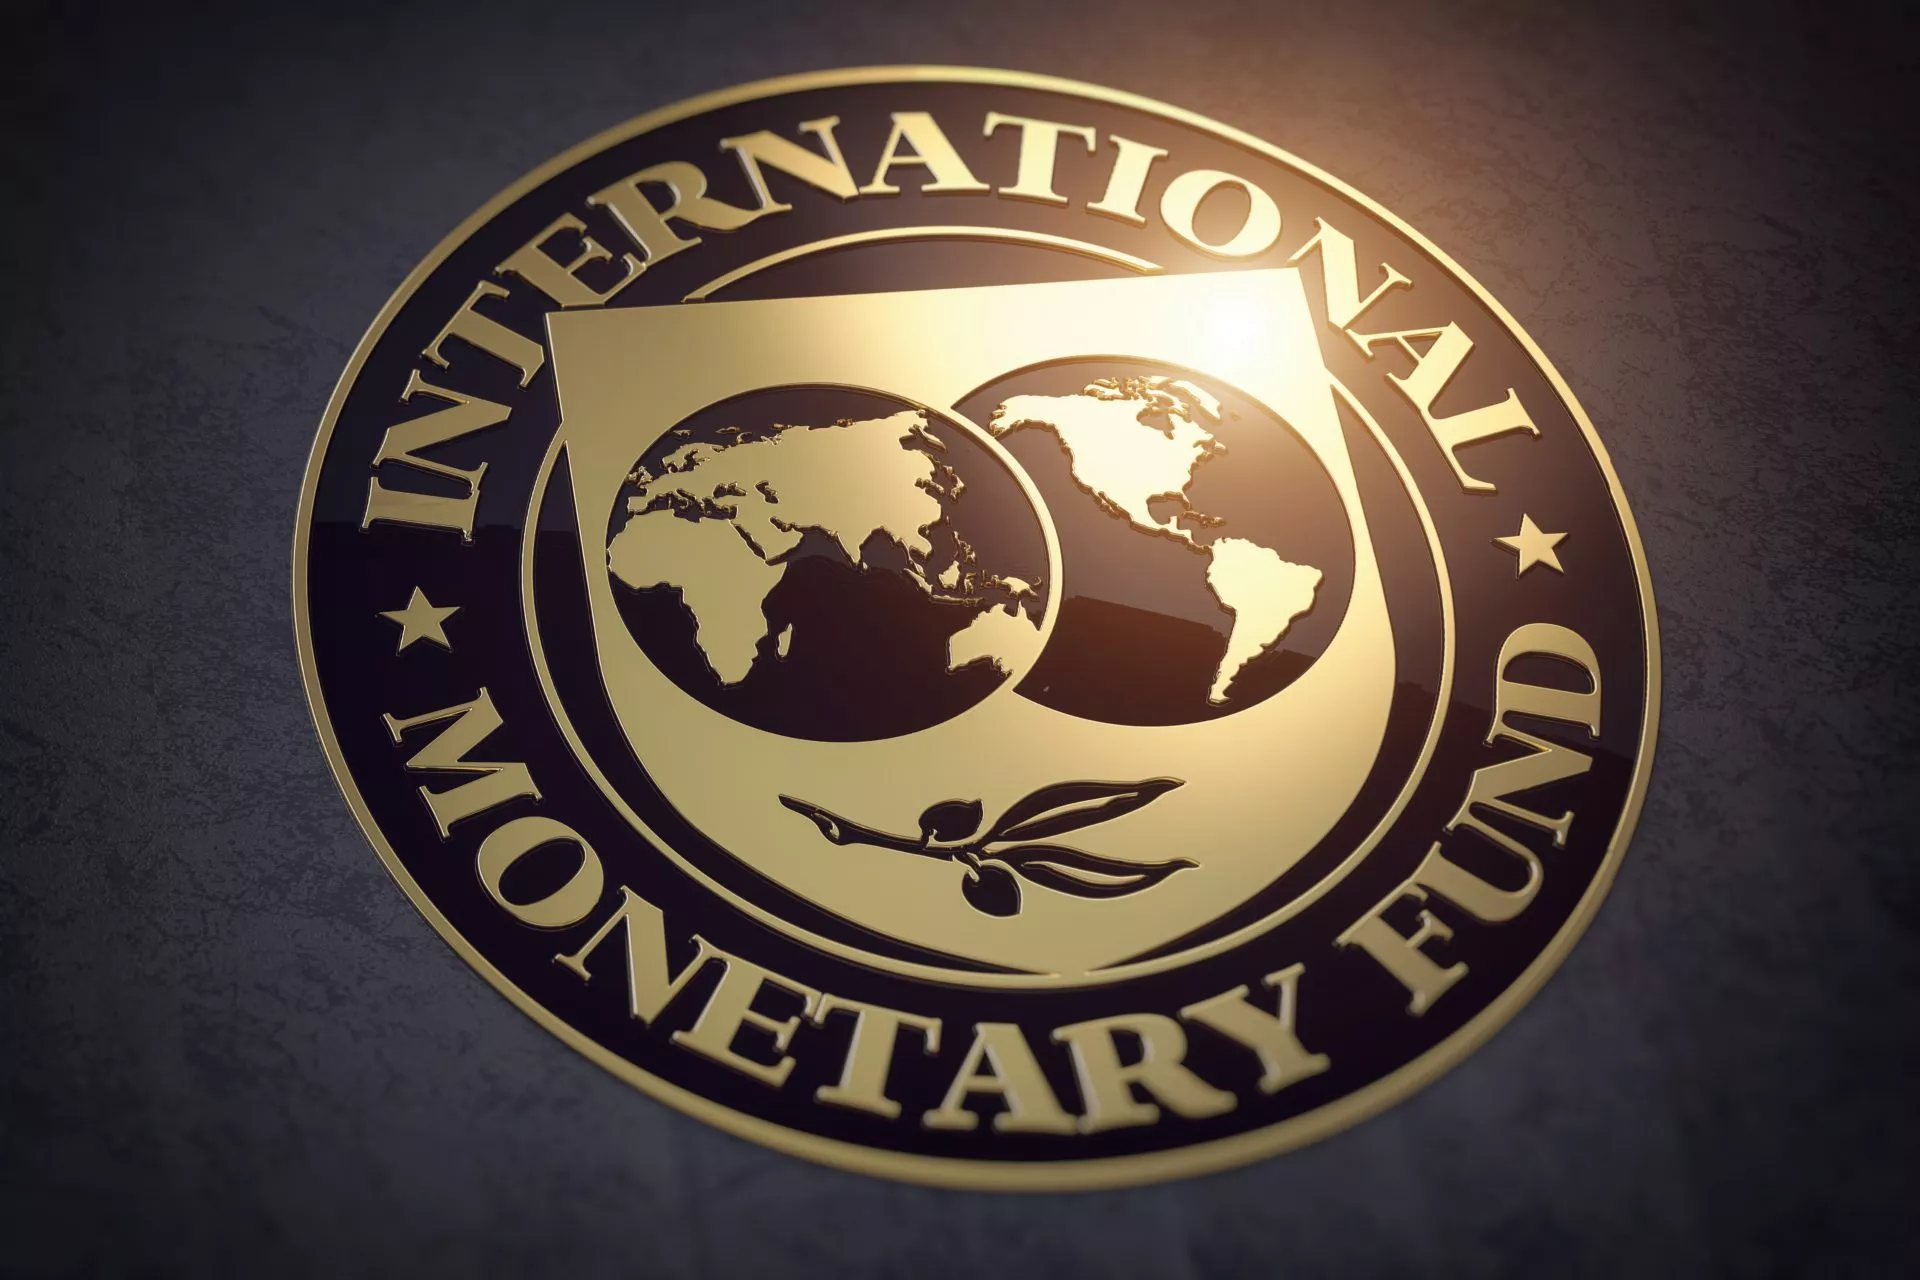 IMF, internationaal monetair fonds